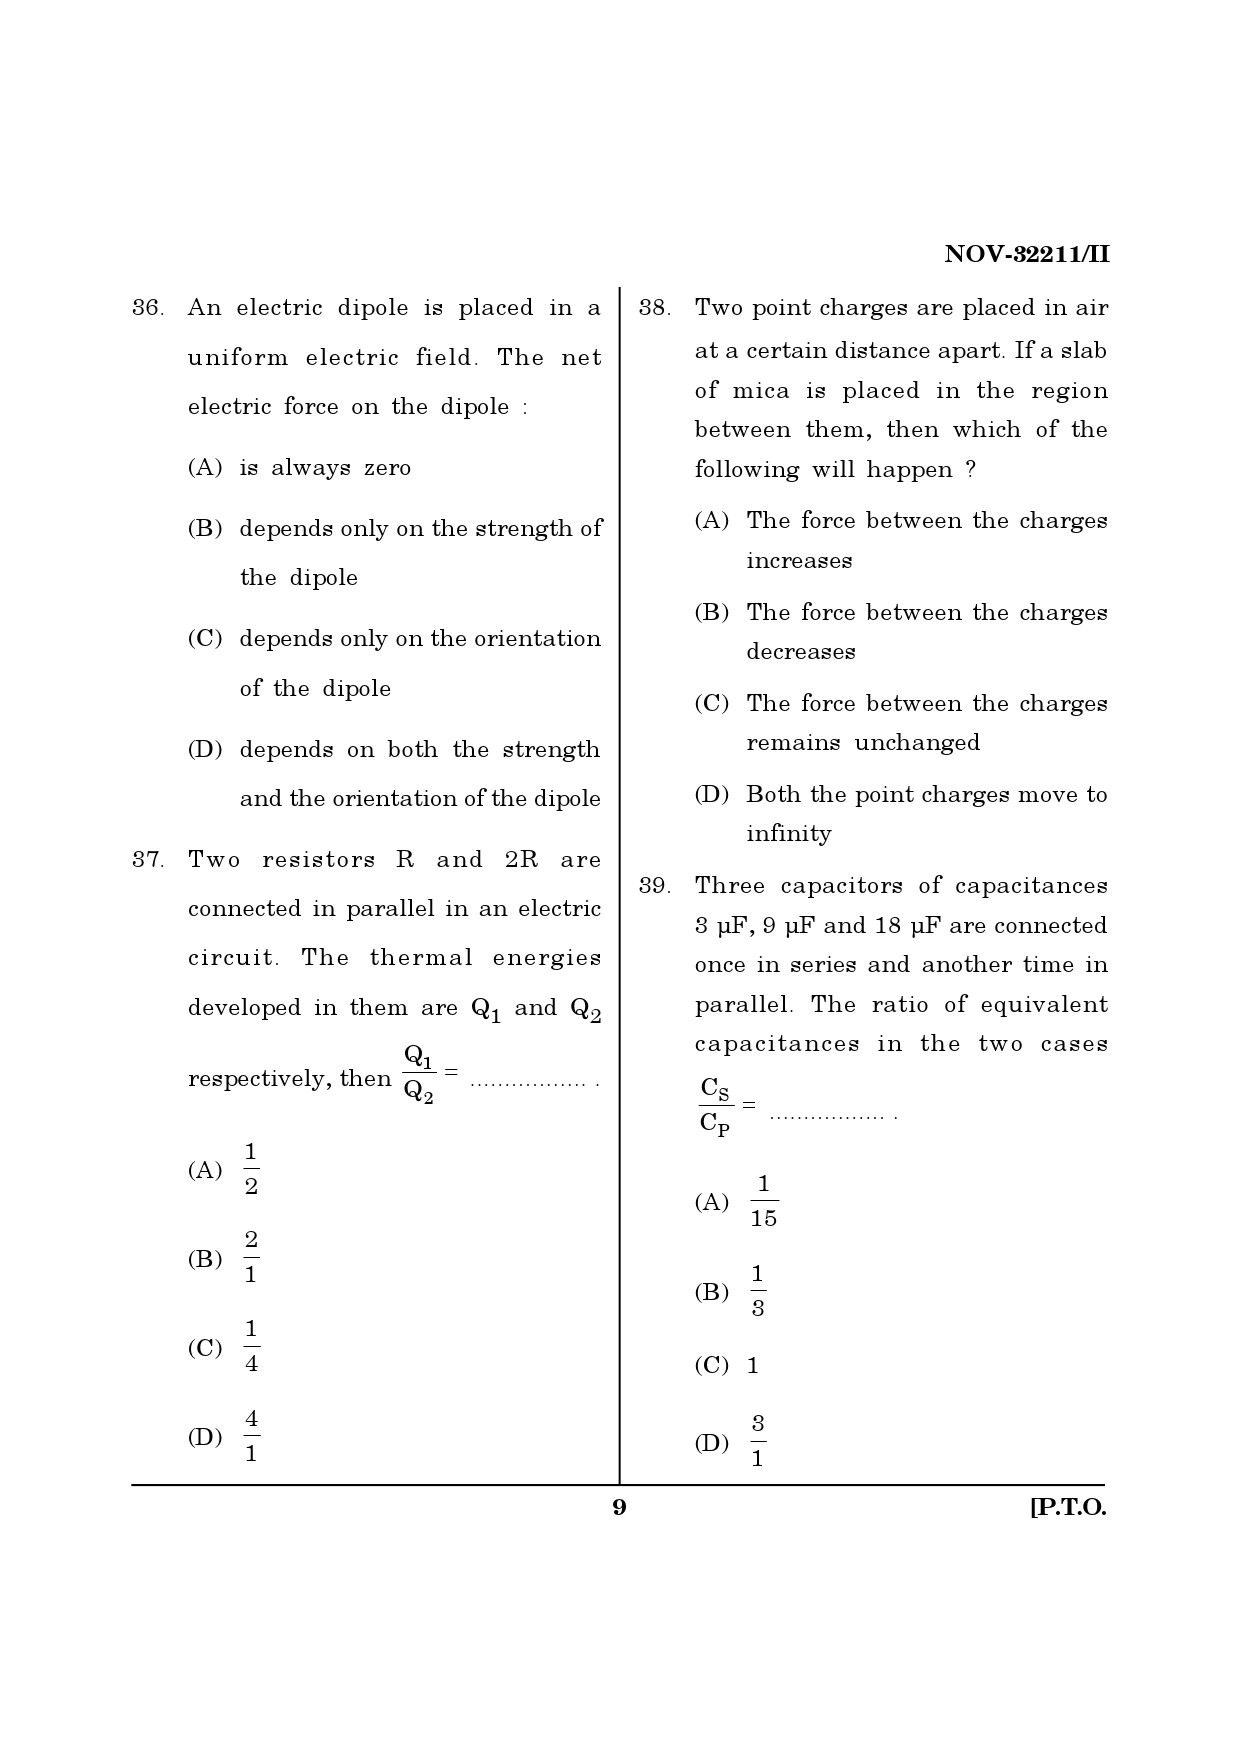 Maharashtra SET Physics Question Paper II November 2011 9